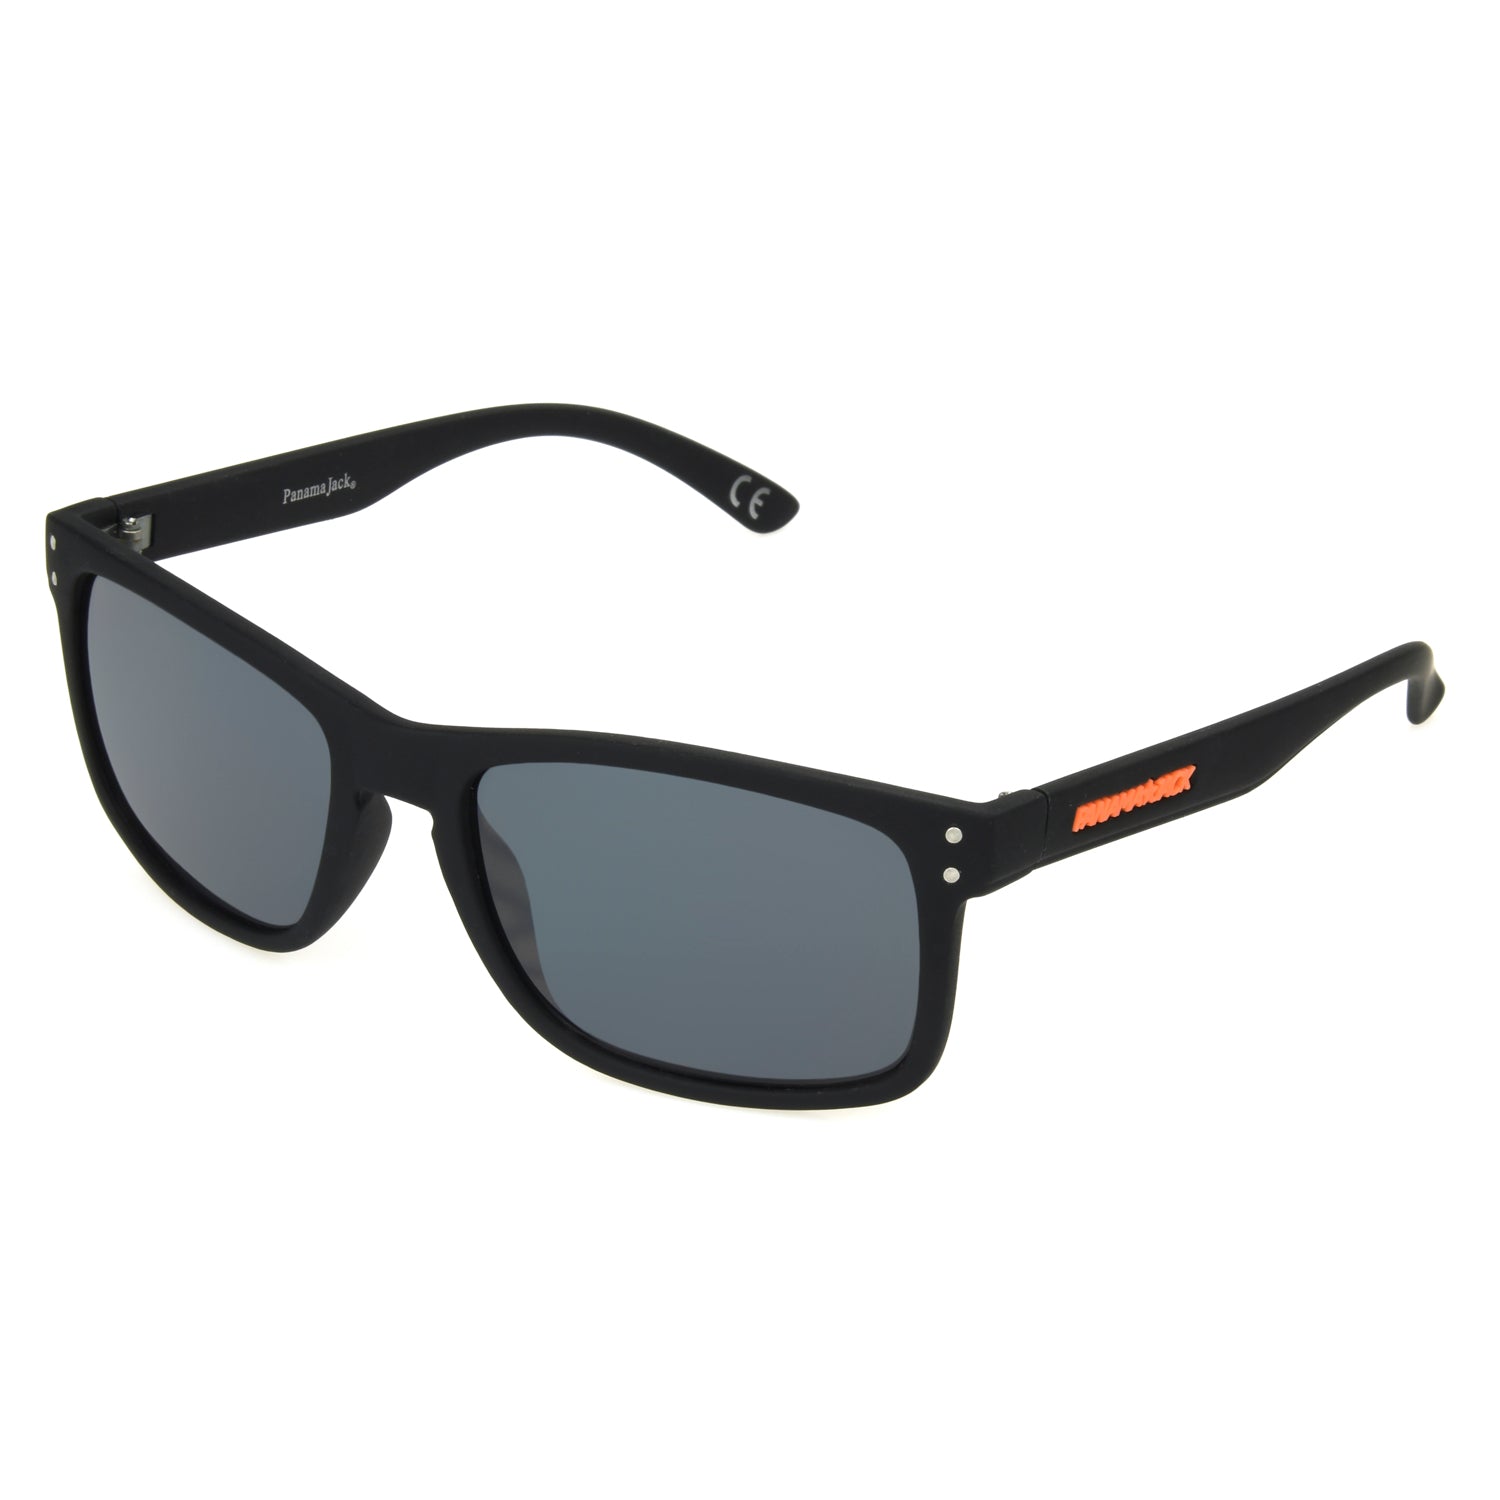 Panama Jack Matte Black Classic Sport Sunglasses, 100% UVA-UVB Lens Protection, Scratch & Impact Resistant